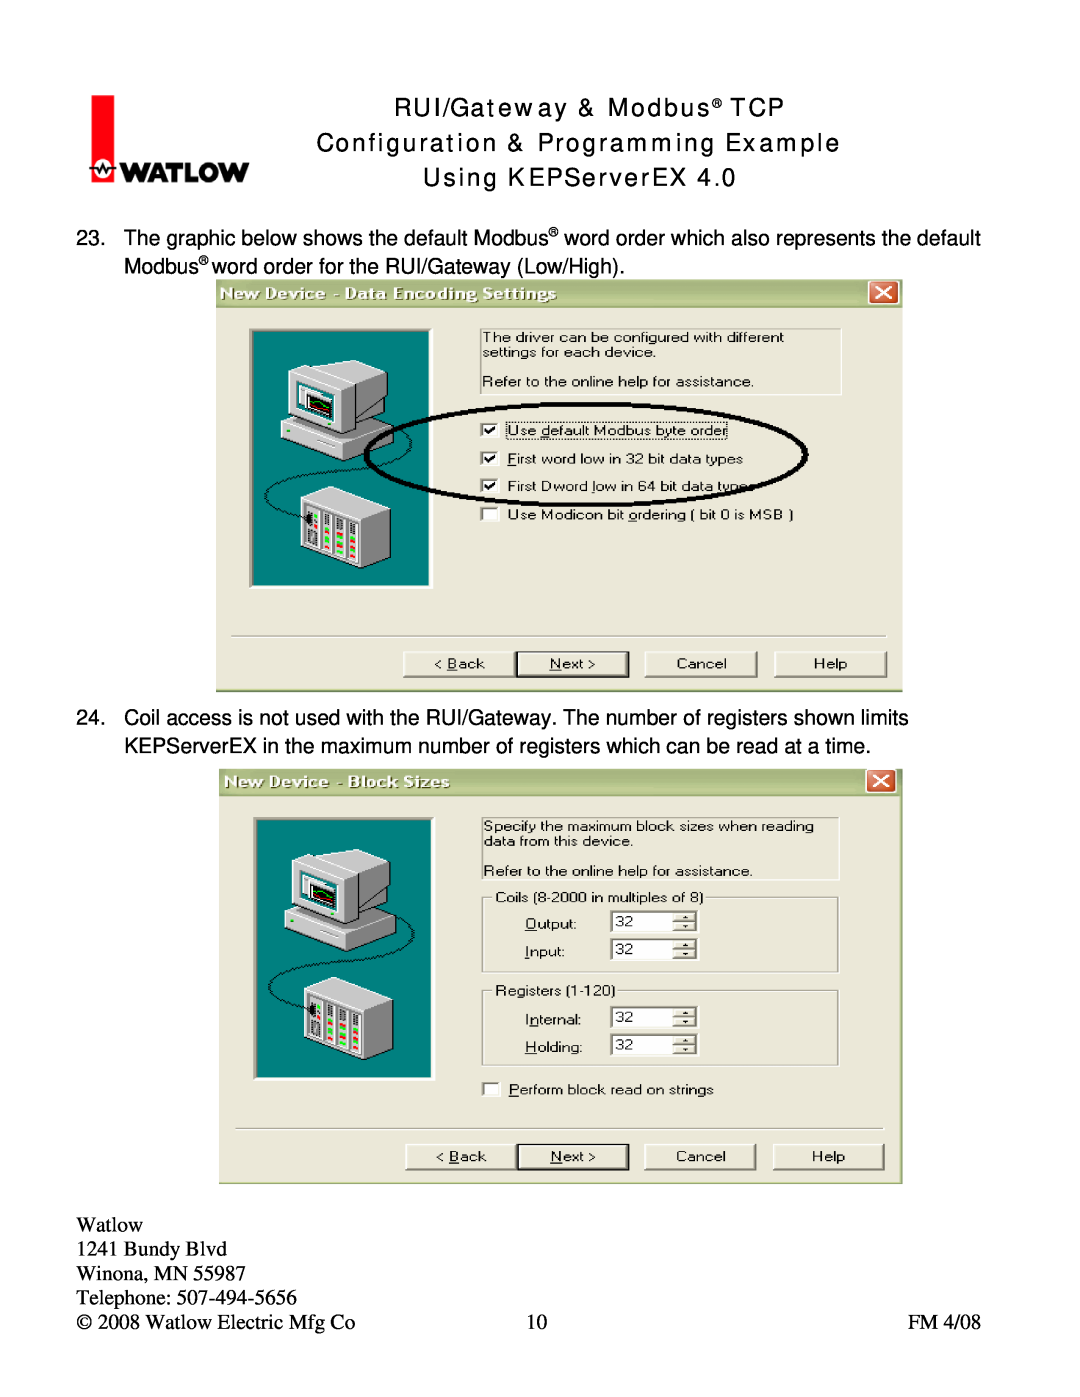 Watlow Electric user manual RUI/Gateway & Modbus TCP Configuration & Programming Example, Using KEPServerEX 